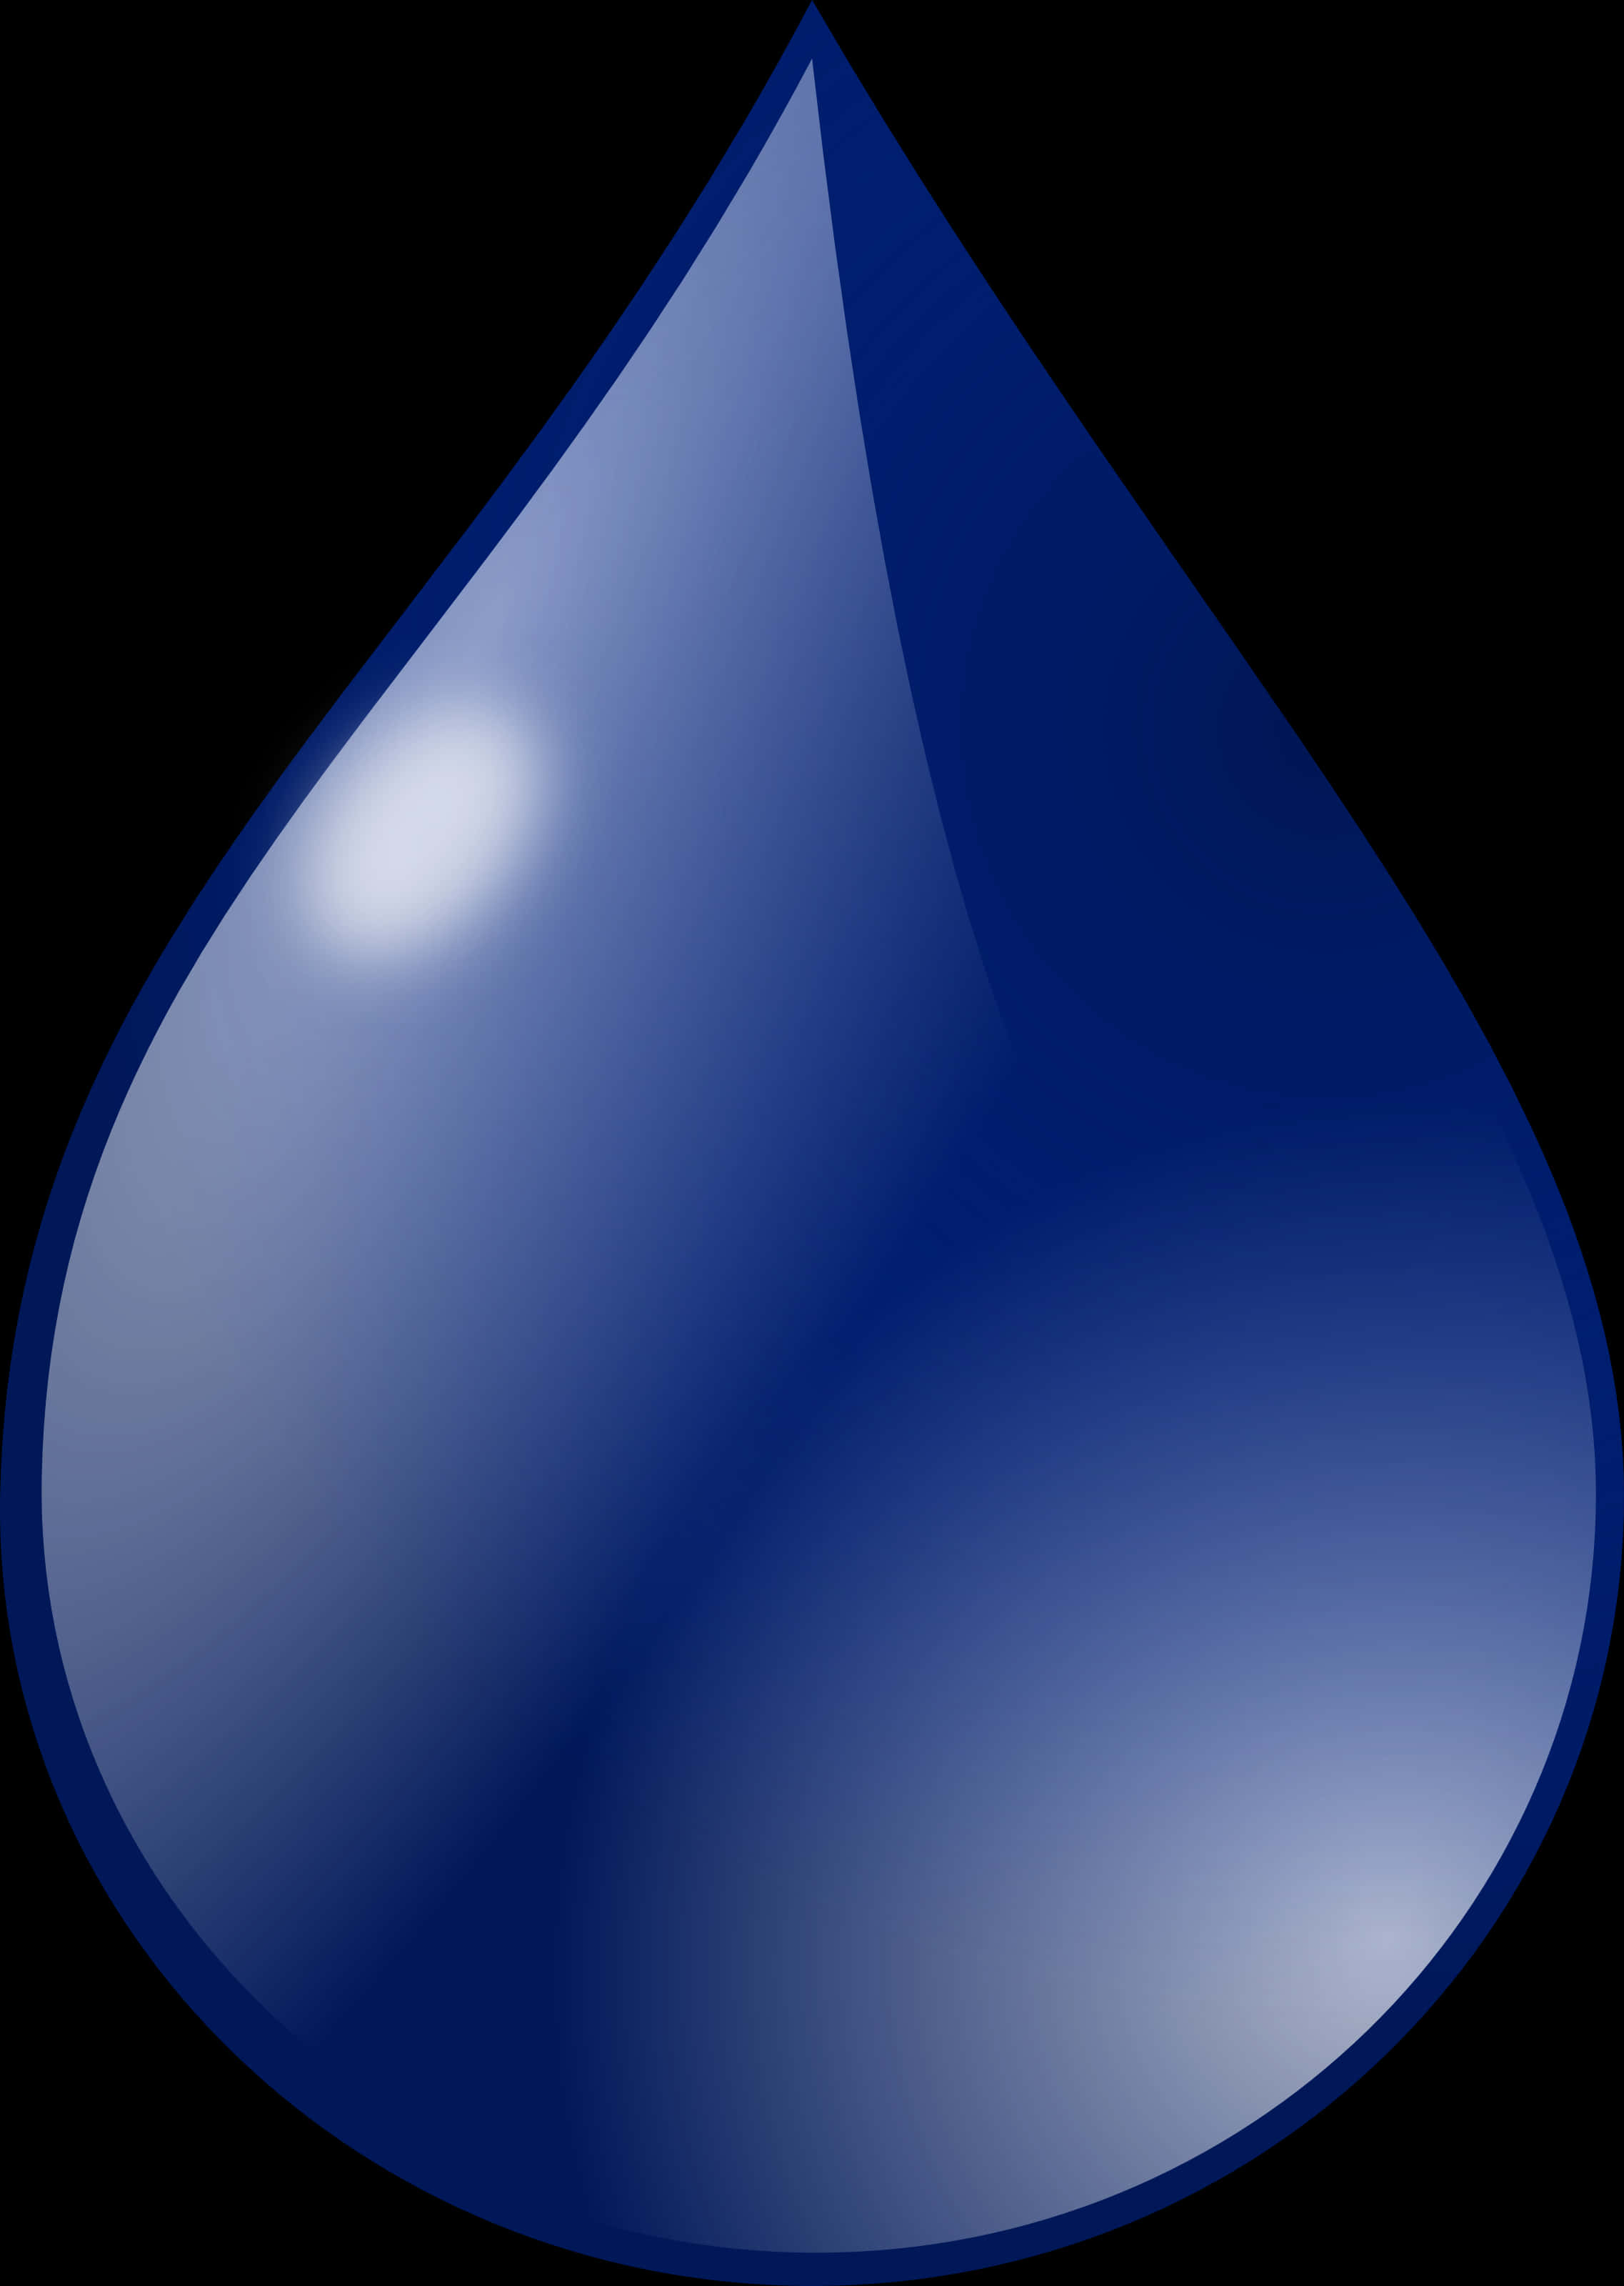 Blue Tear Drop Graphic PNG image